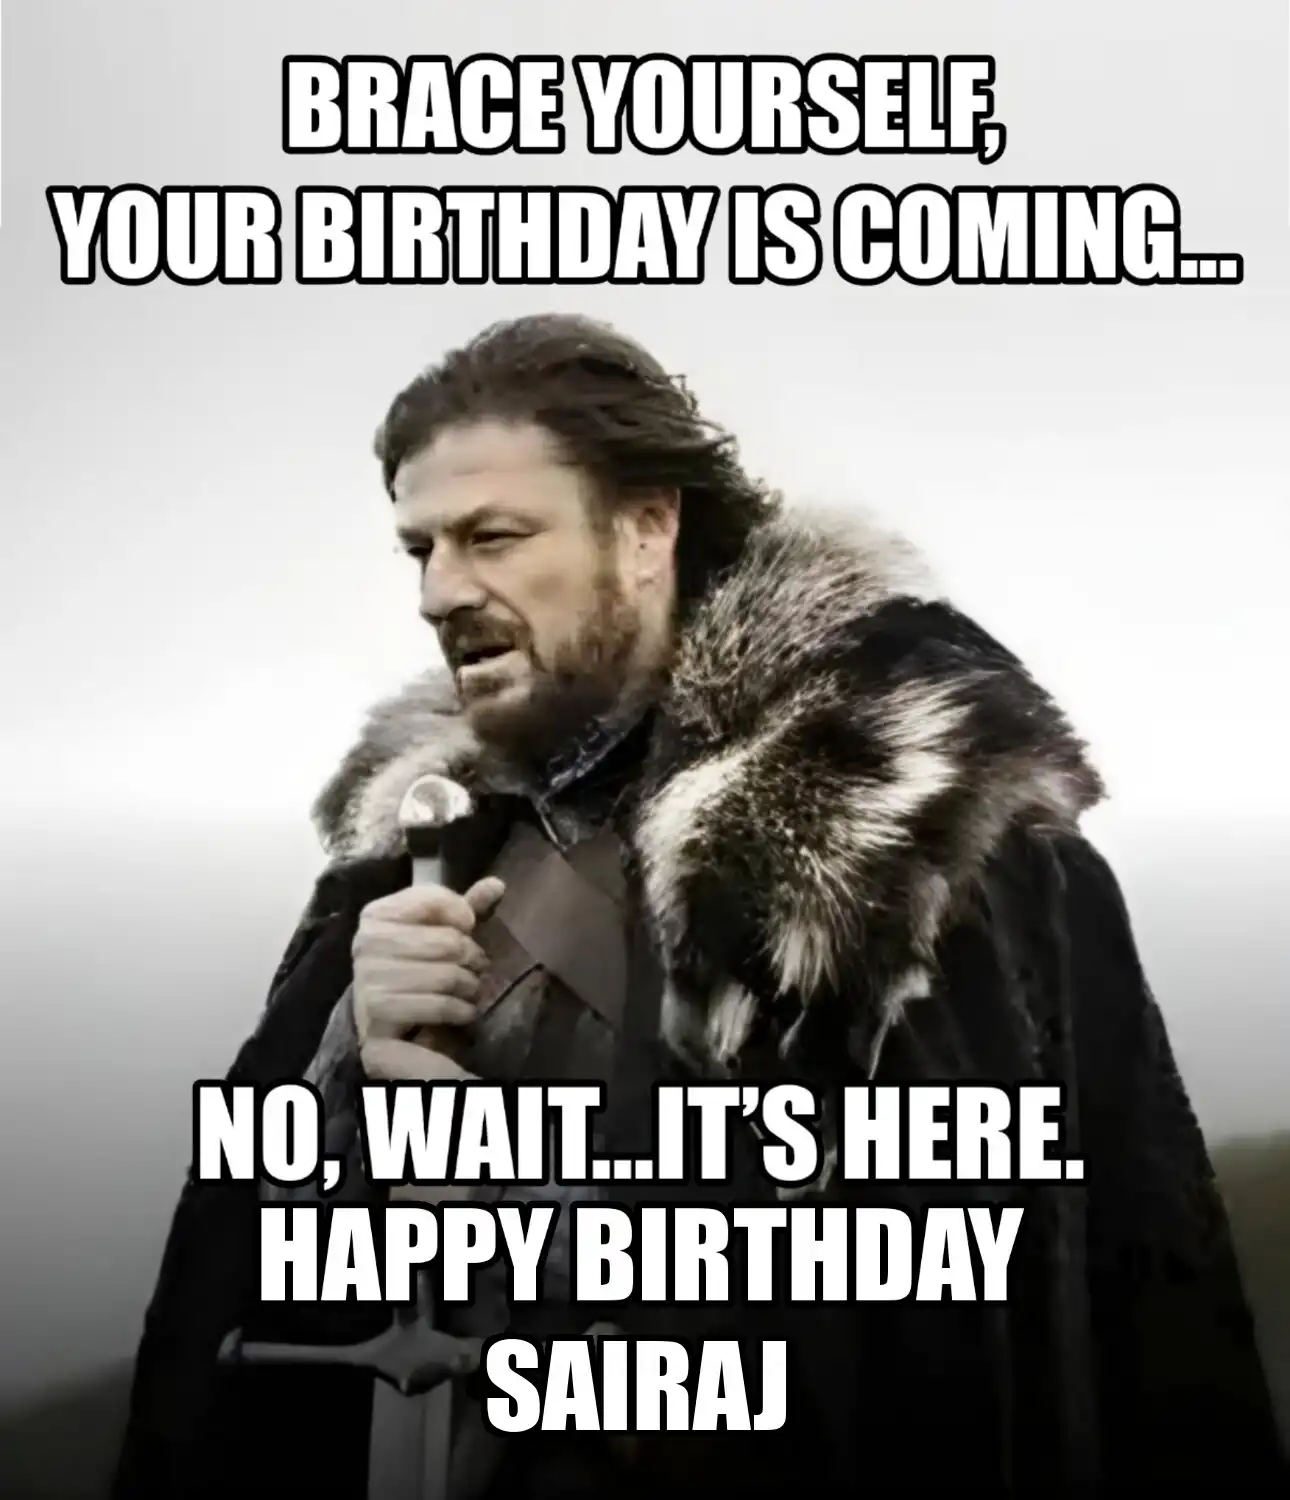 Happy Birthday Sairaj Brace Yourself Your Birthday Is Coming Meme